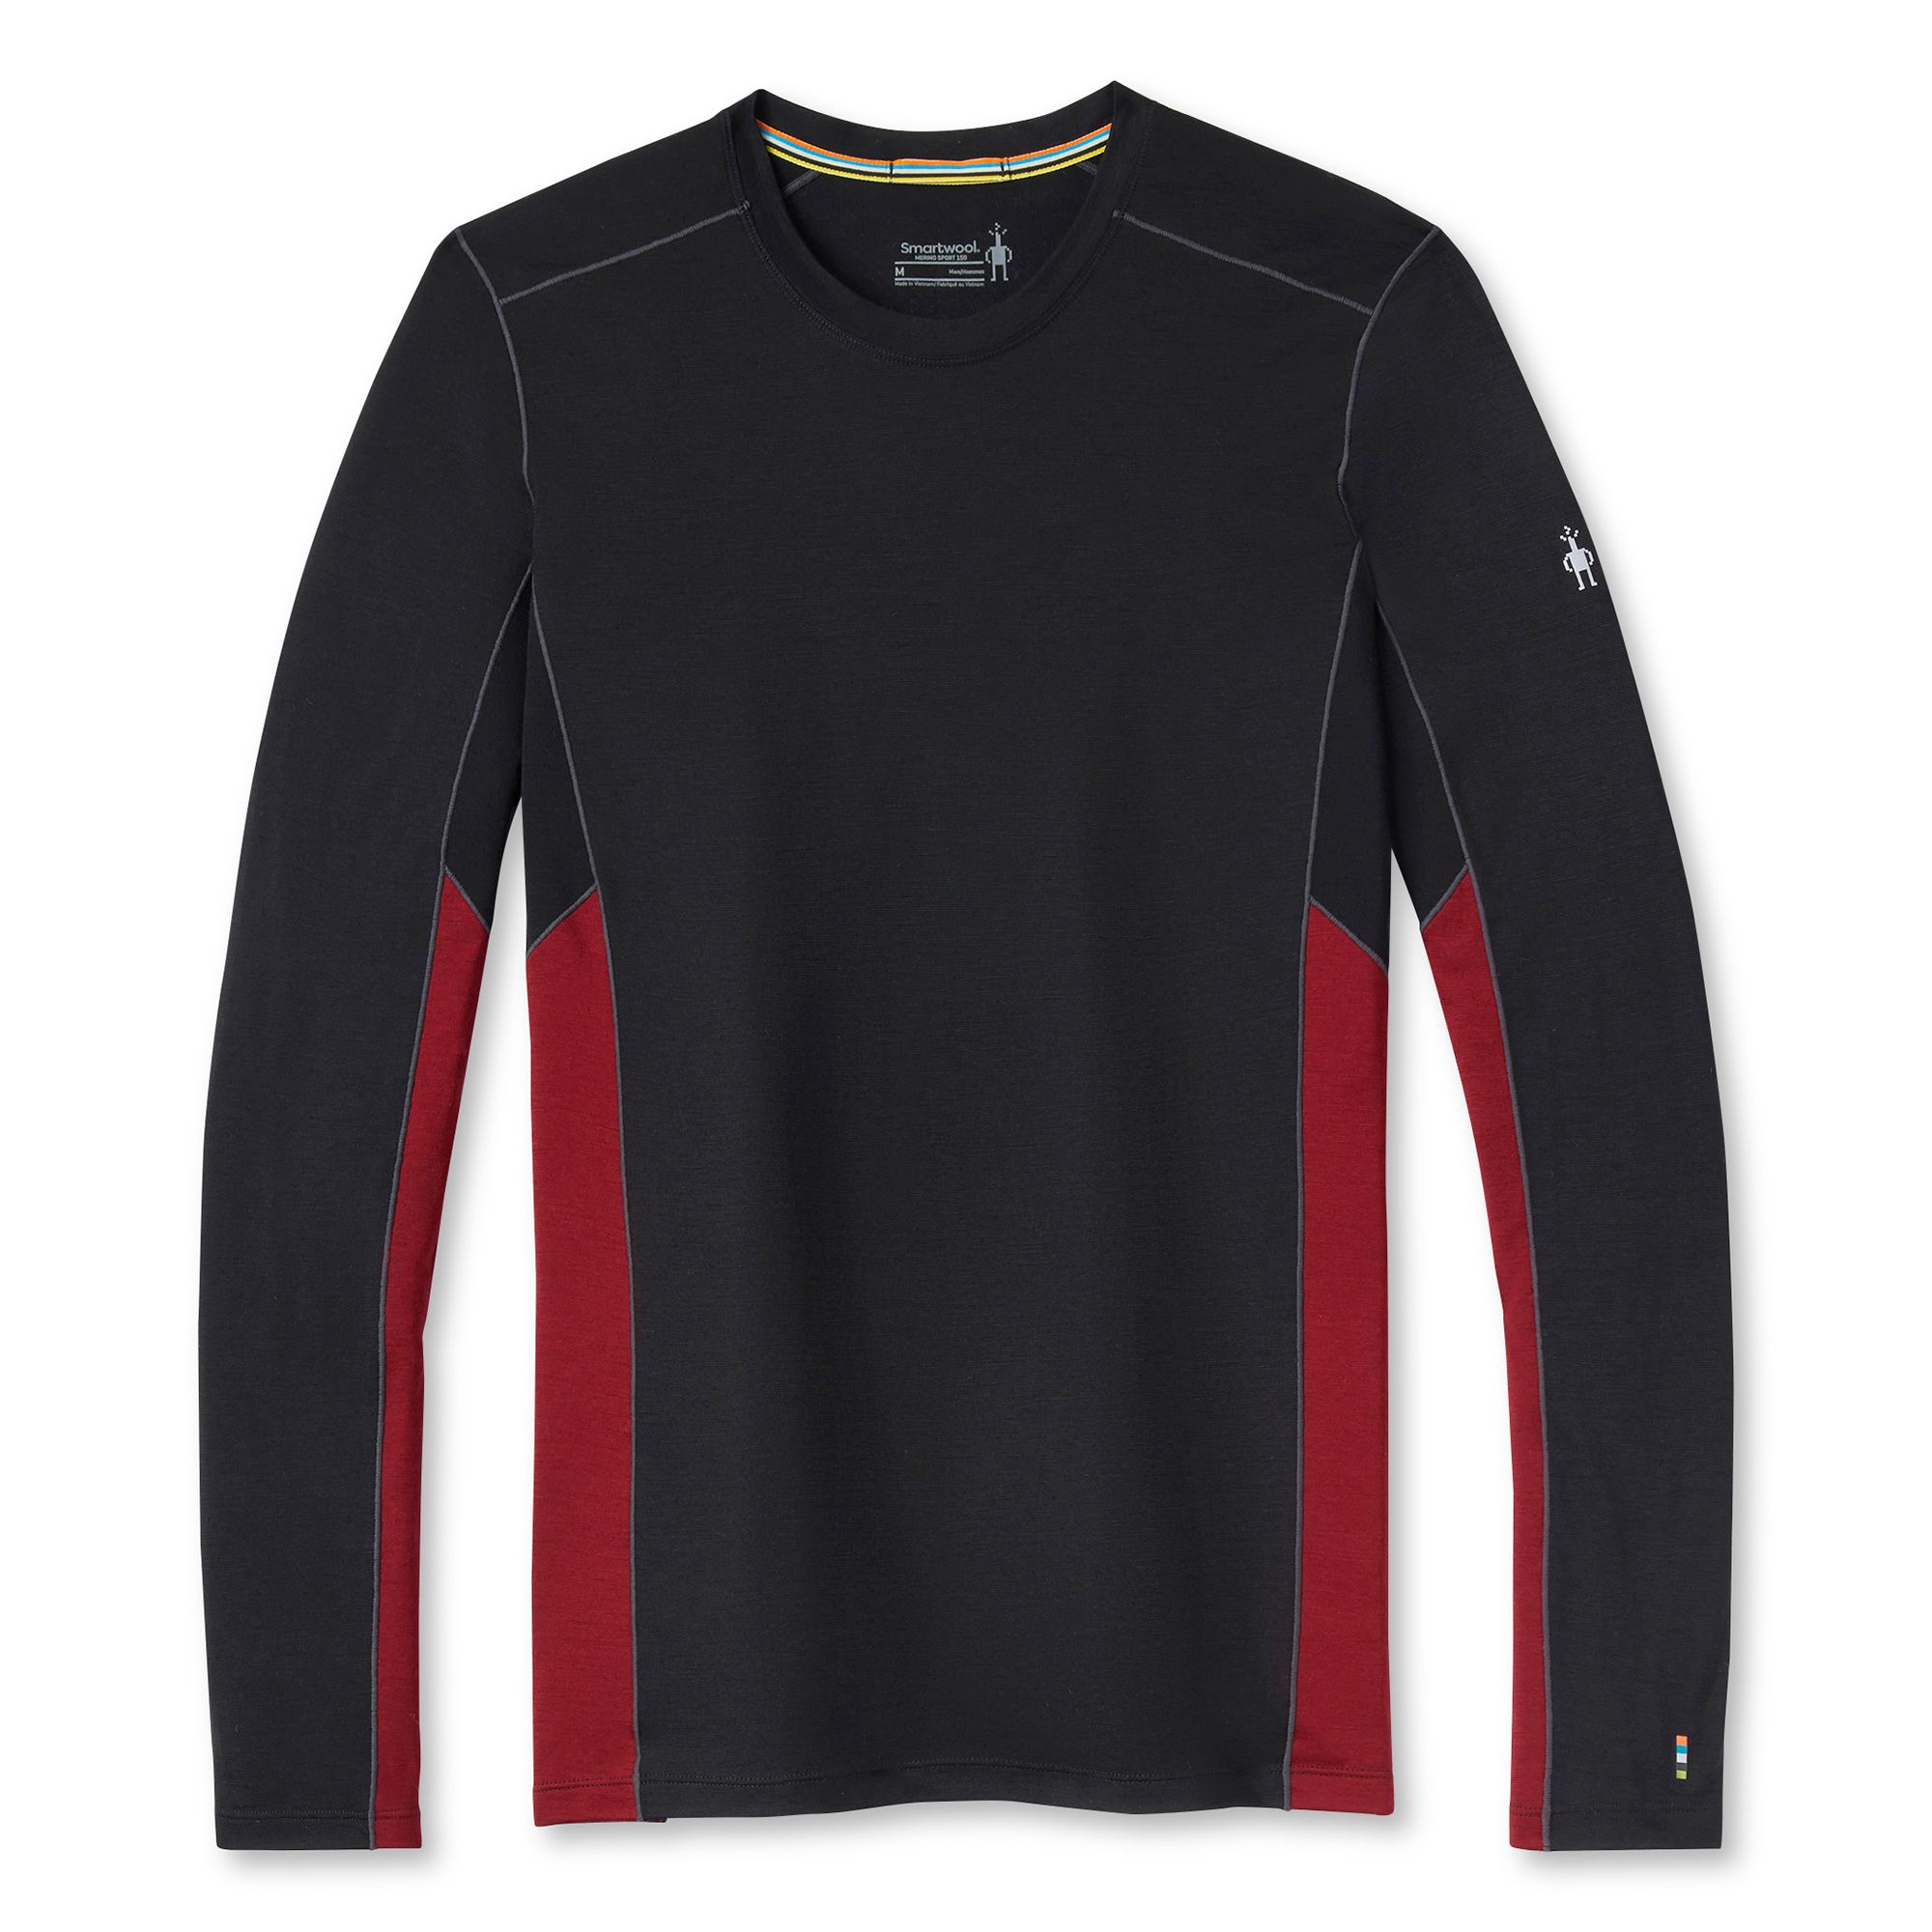 Smartwool Merino Sport 150 Long Sleeve Button Up - Men's, Black